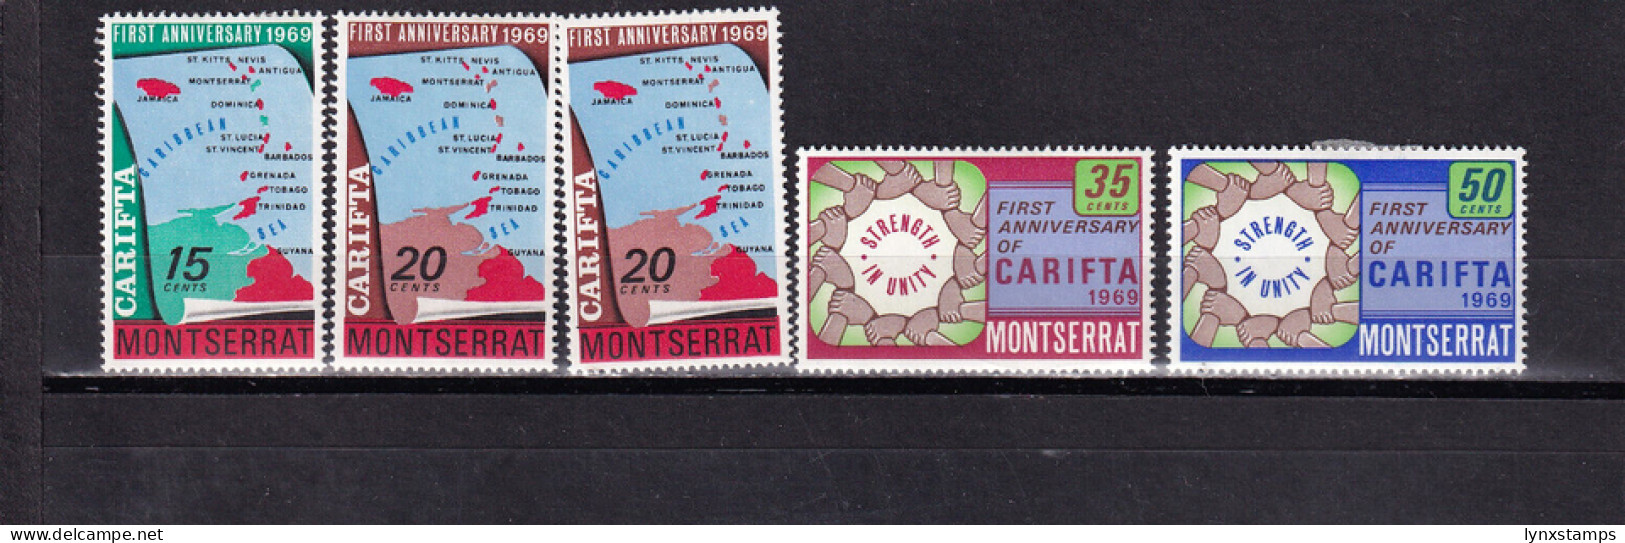 LI07 Montserrat 1969 First Anniversary Of CARIFTA Mint Hinged Stamps Full Set - Montserrat